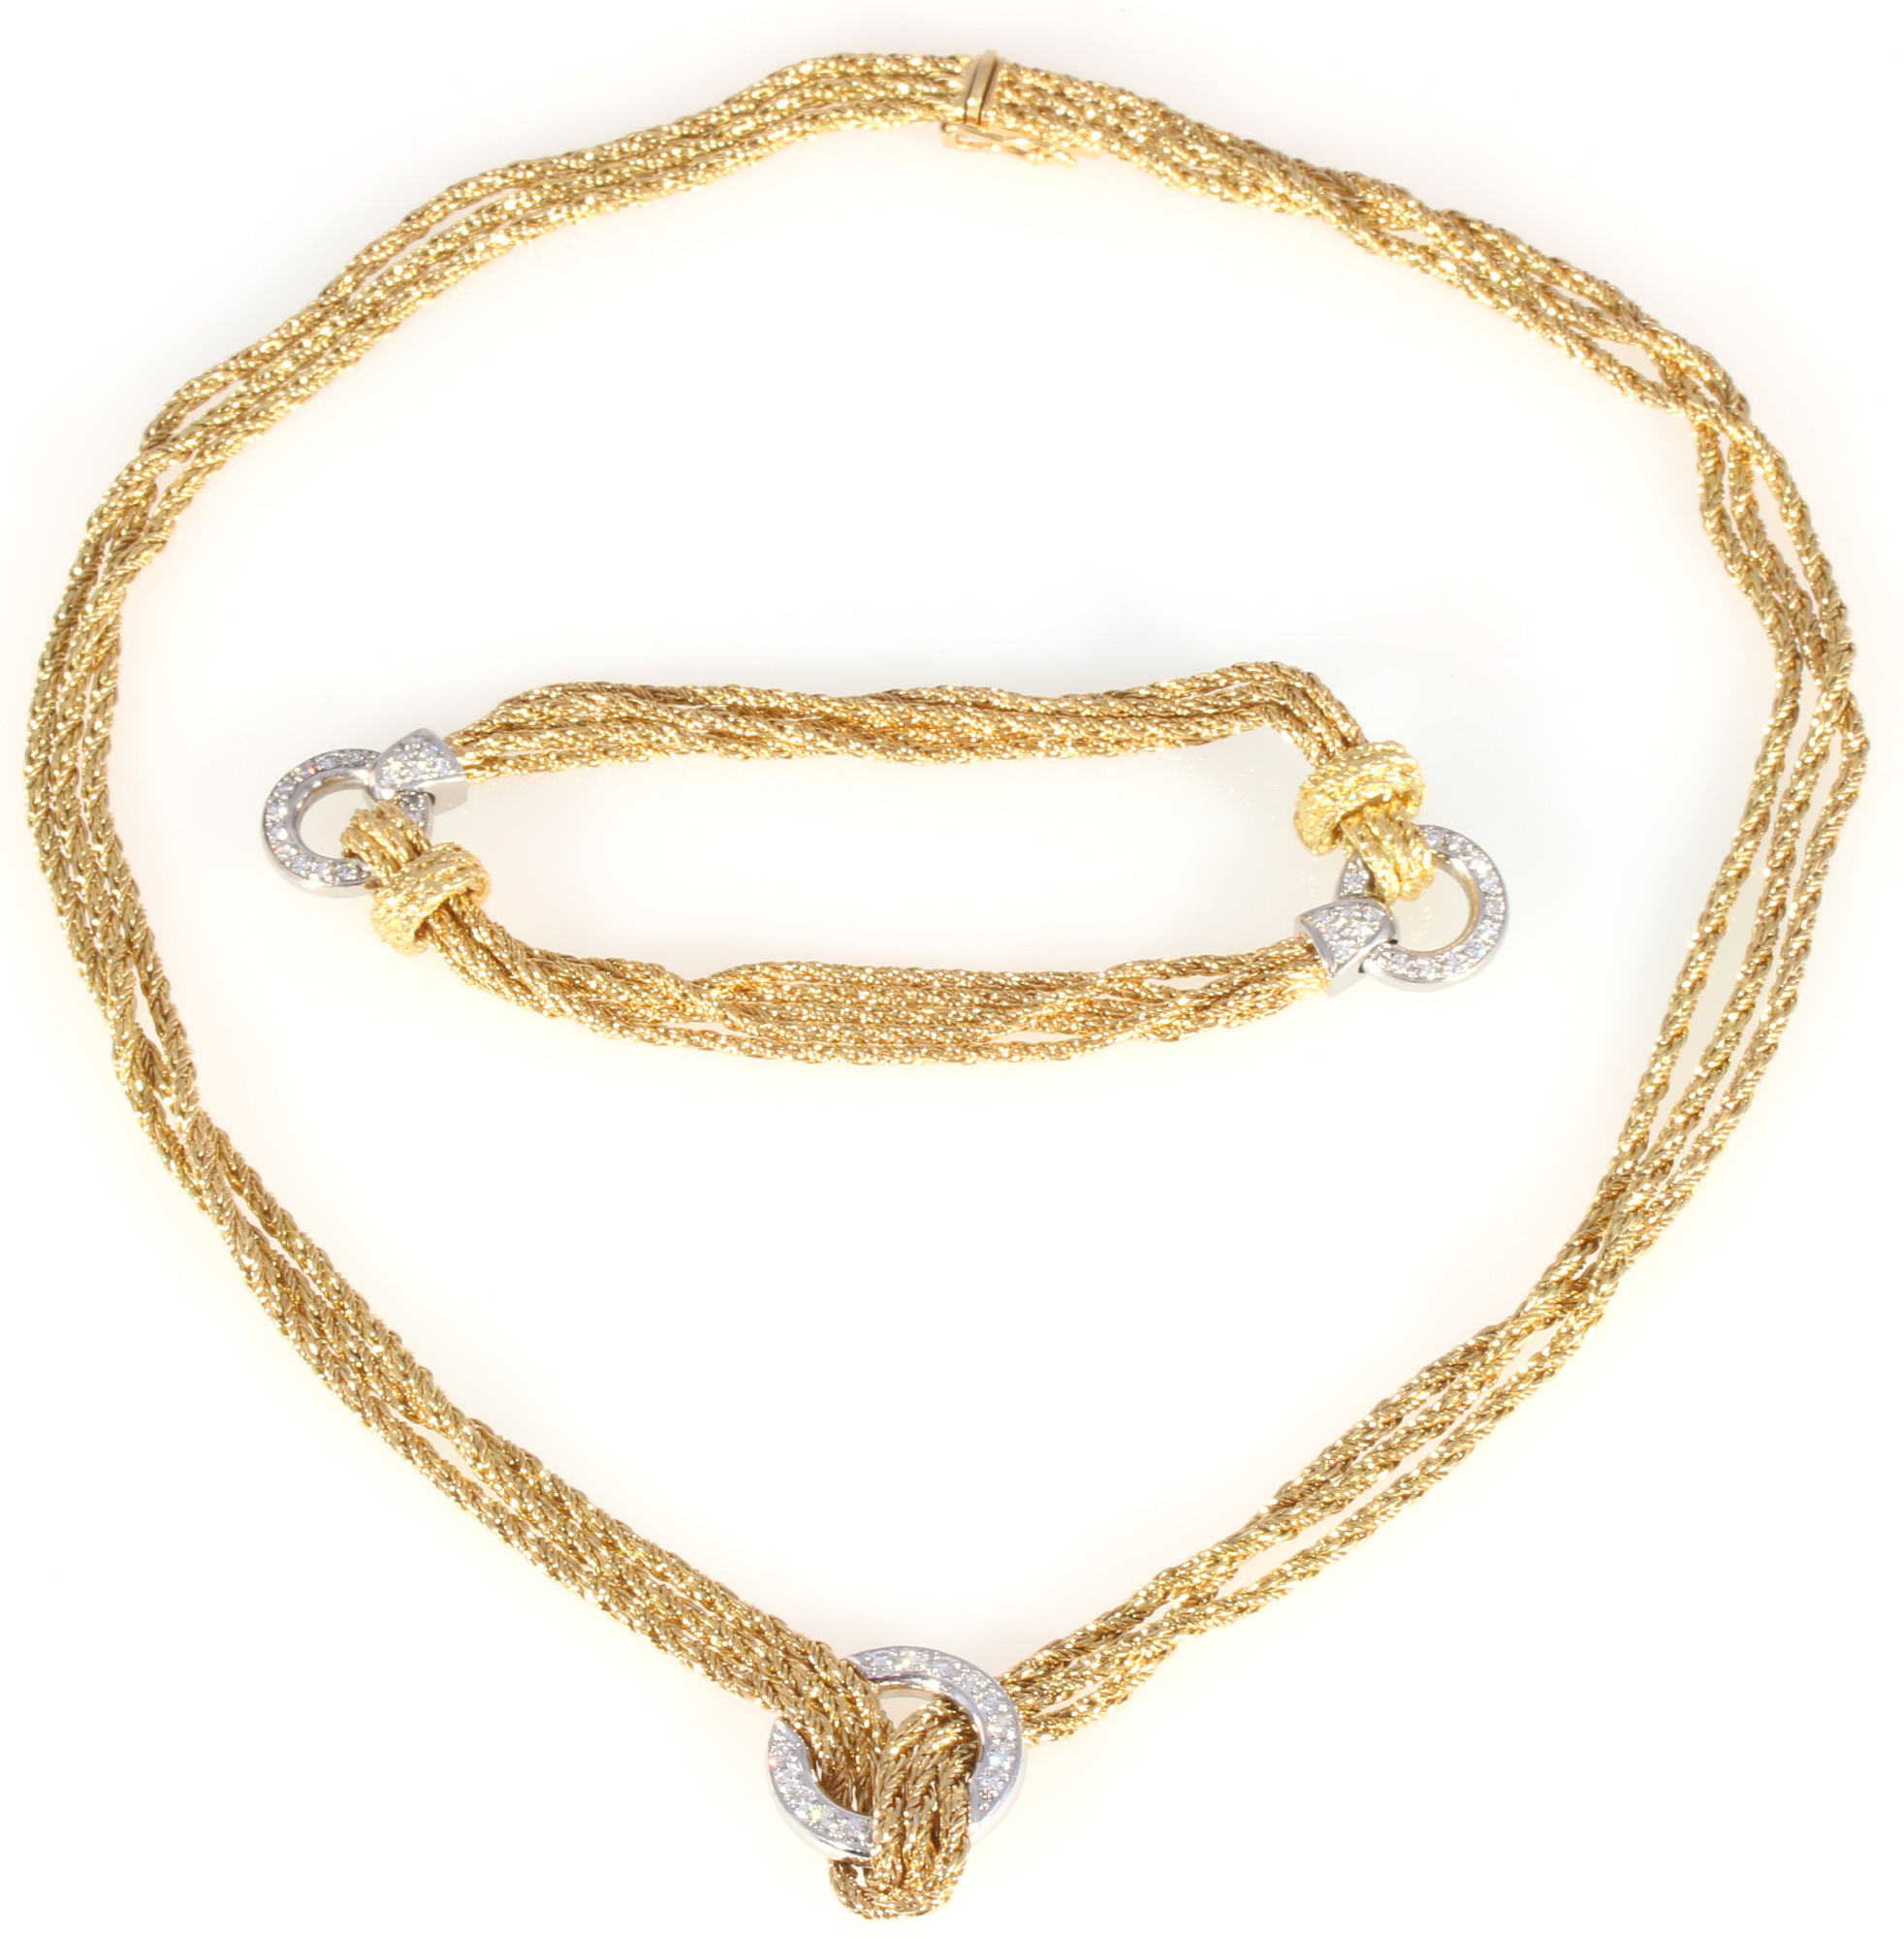 750 gold / 950 platinum diamond necklace and bracelet, cord, 18K Gold / 950 Platin Brillanten Coll